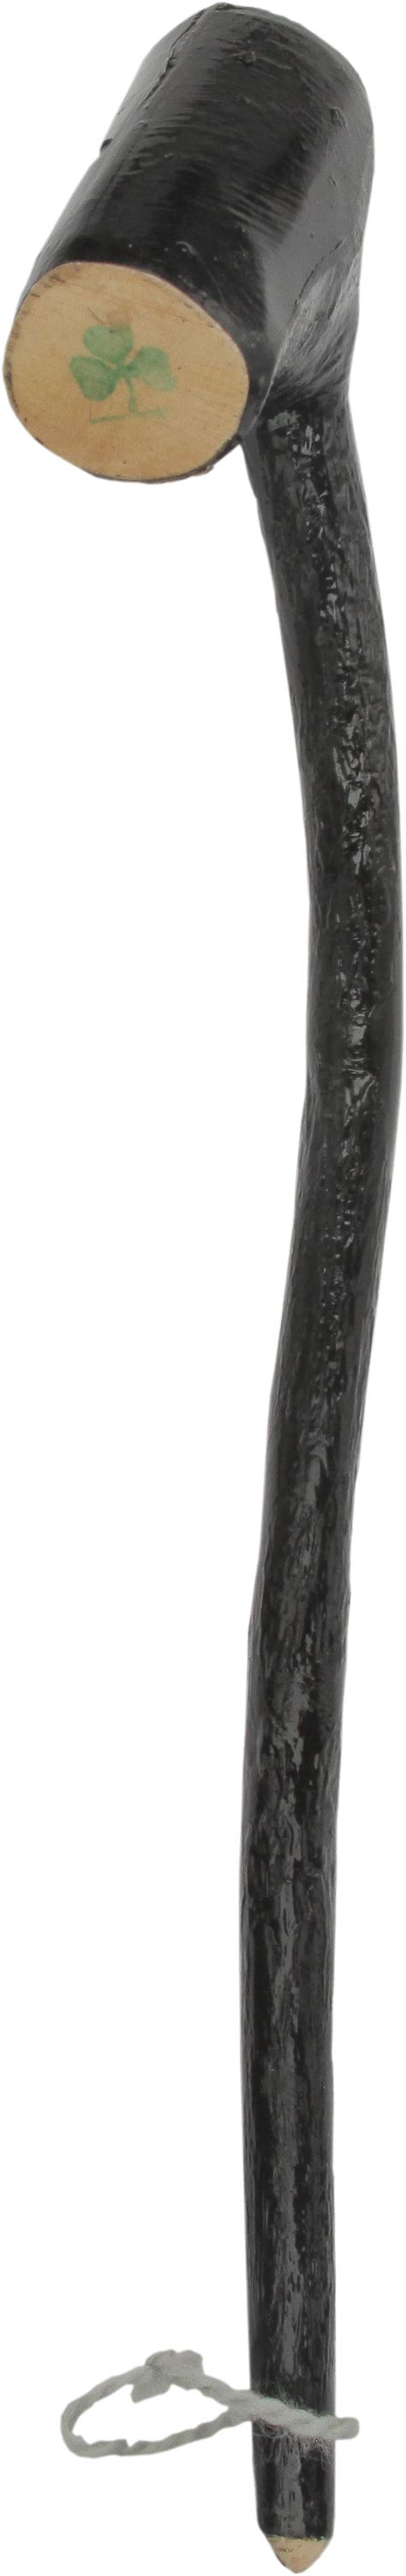 Authentic Irish Blackthorn Shillelagh Stick 16 18 Wooden Walking